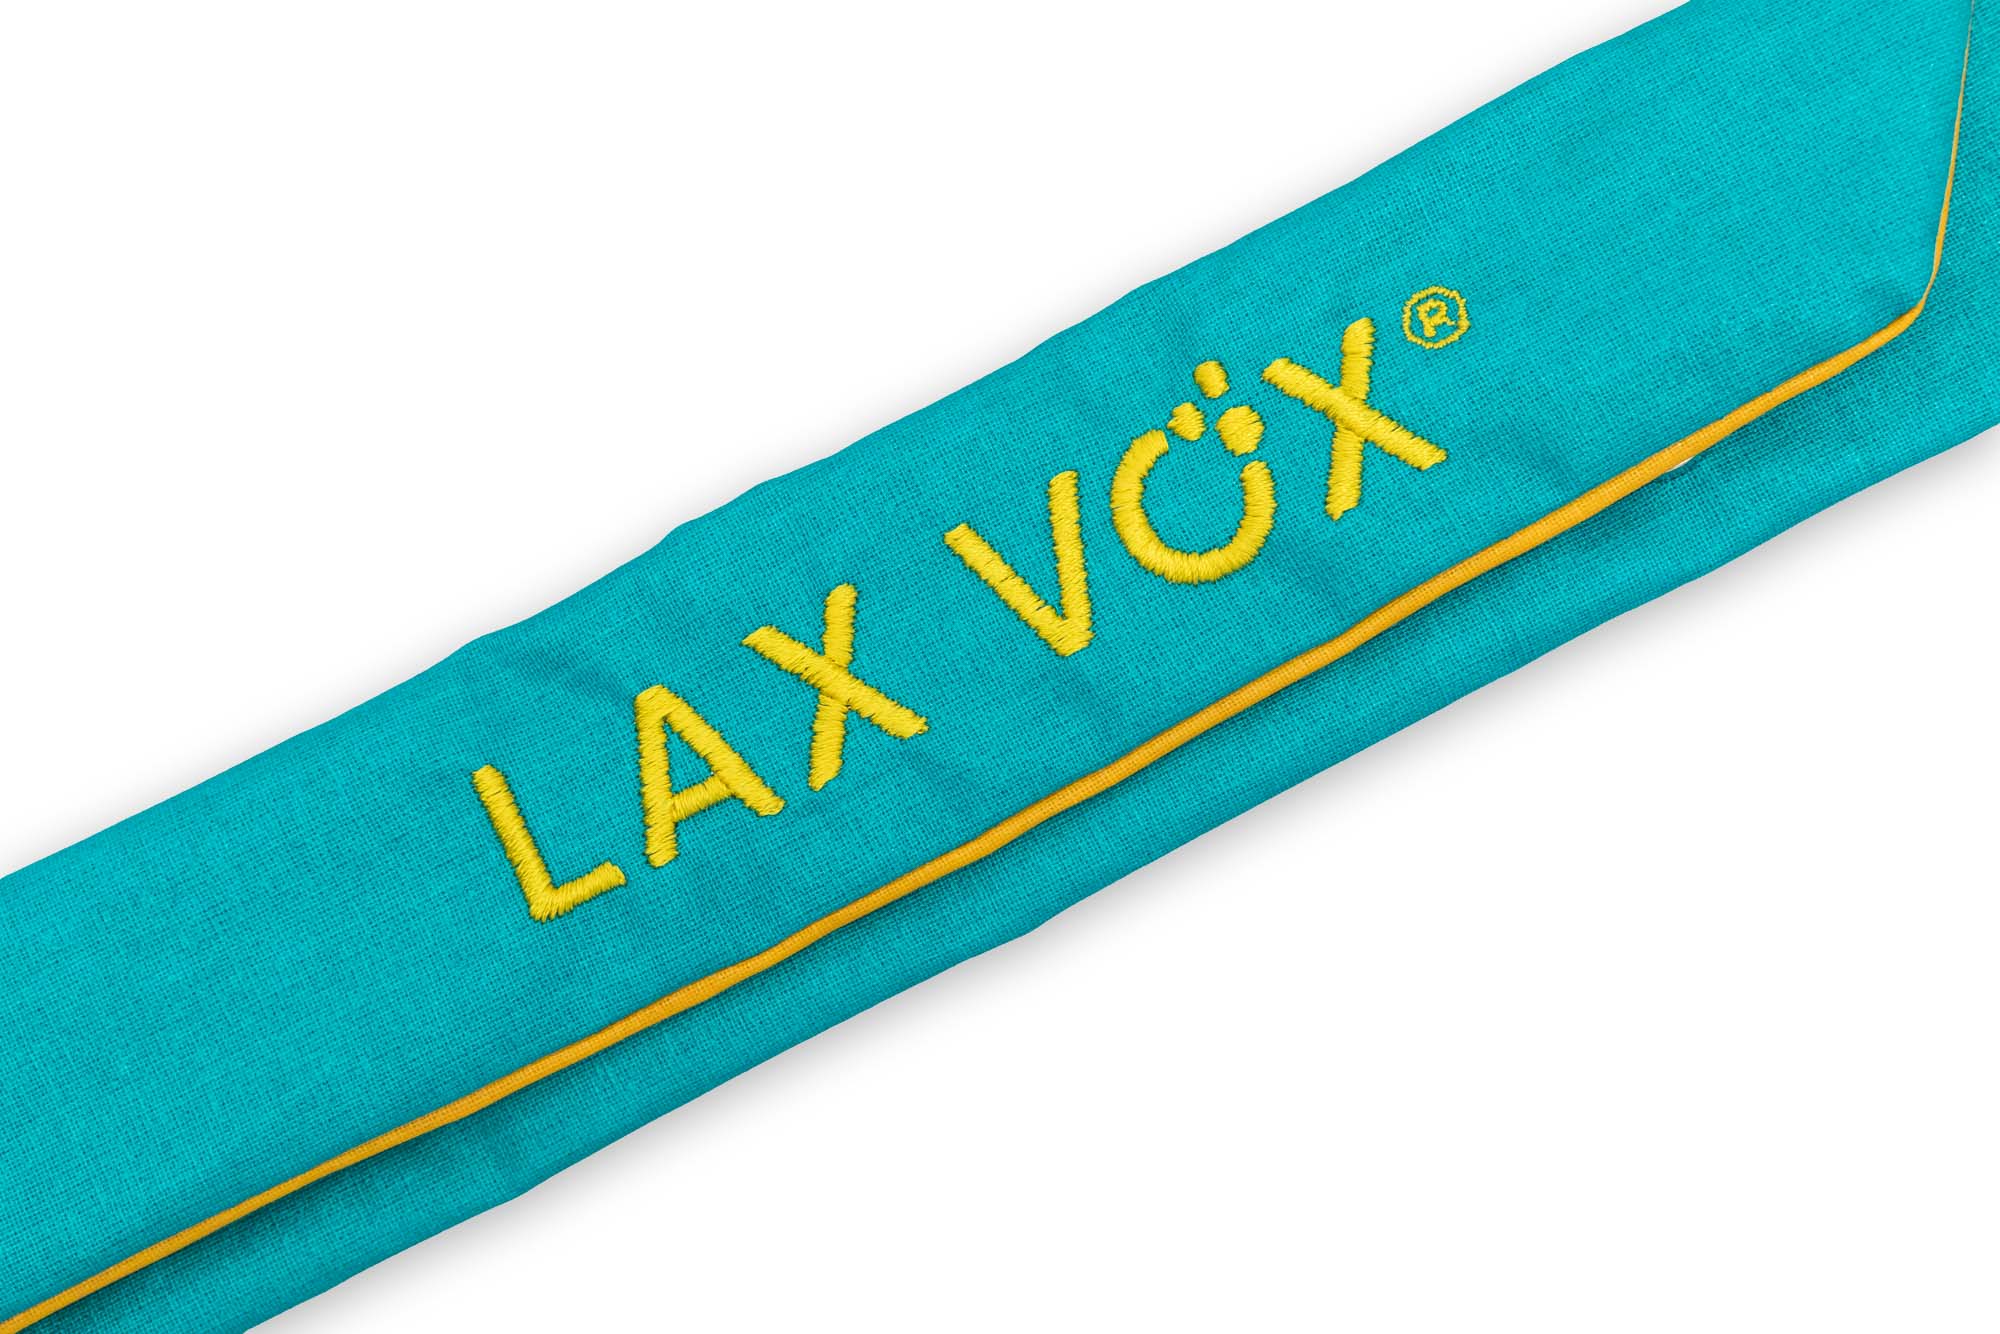 LAX VOX® Starter Set Blue